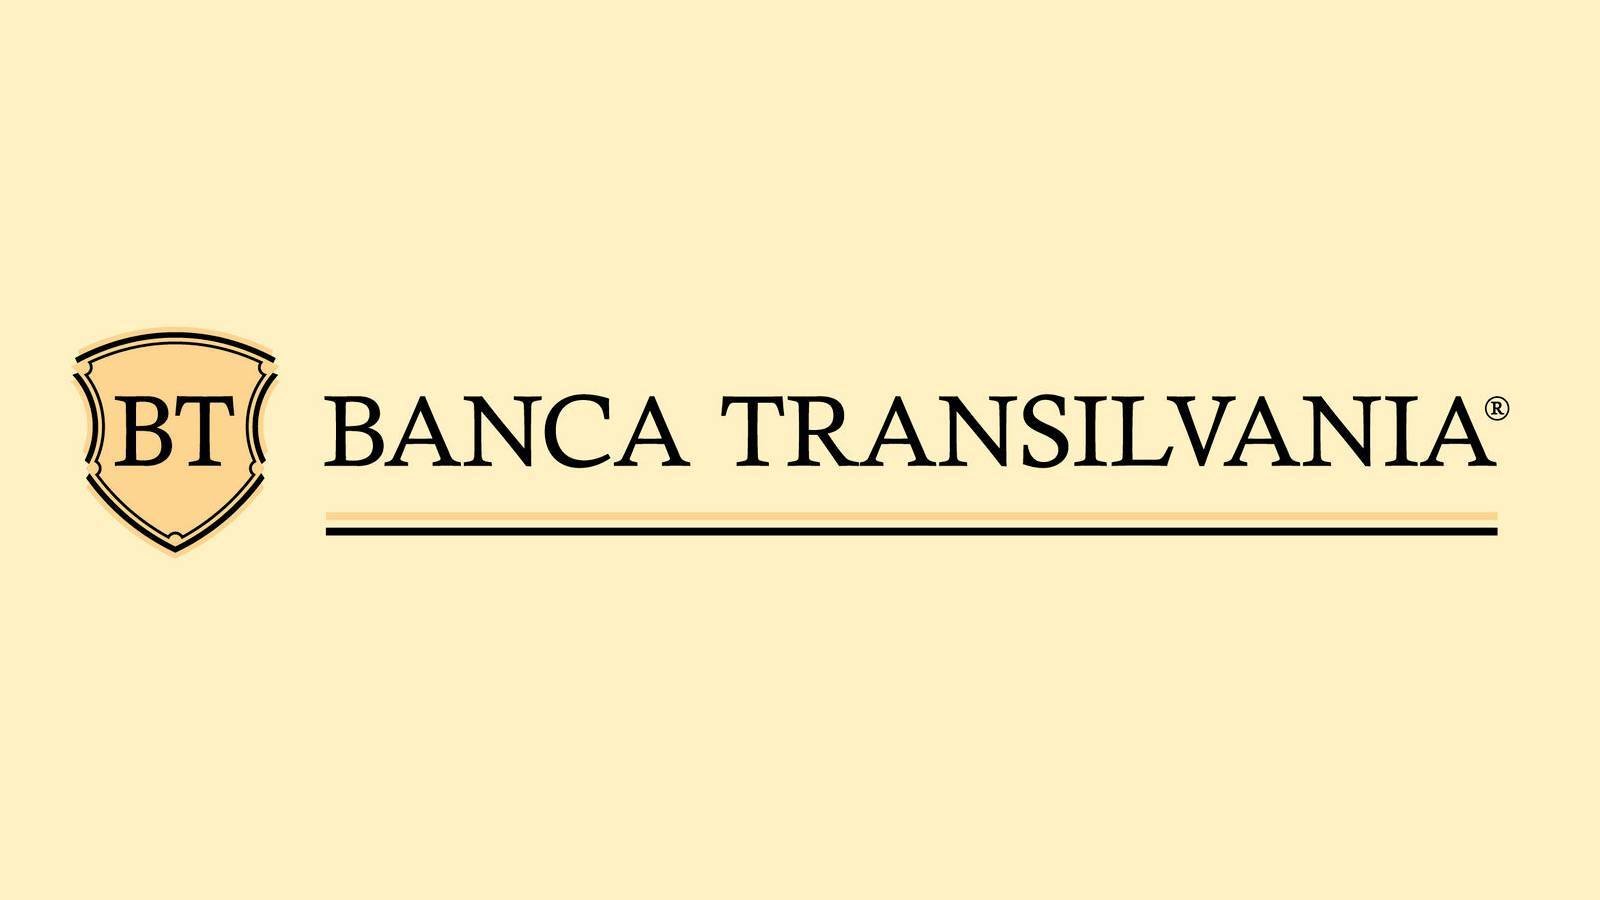 BANCA Transilvania Instiintare Oficiala ULTIM MOMENT Clientii Avertizati